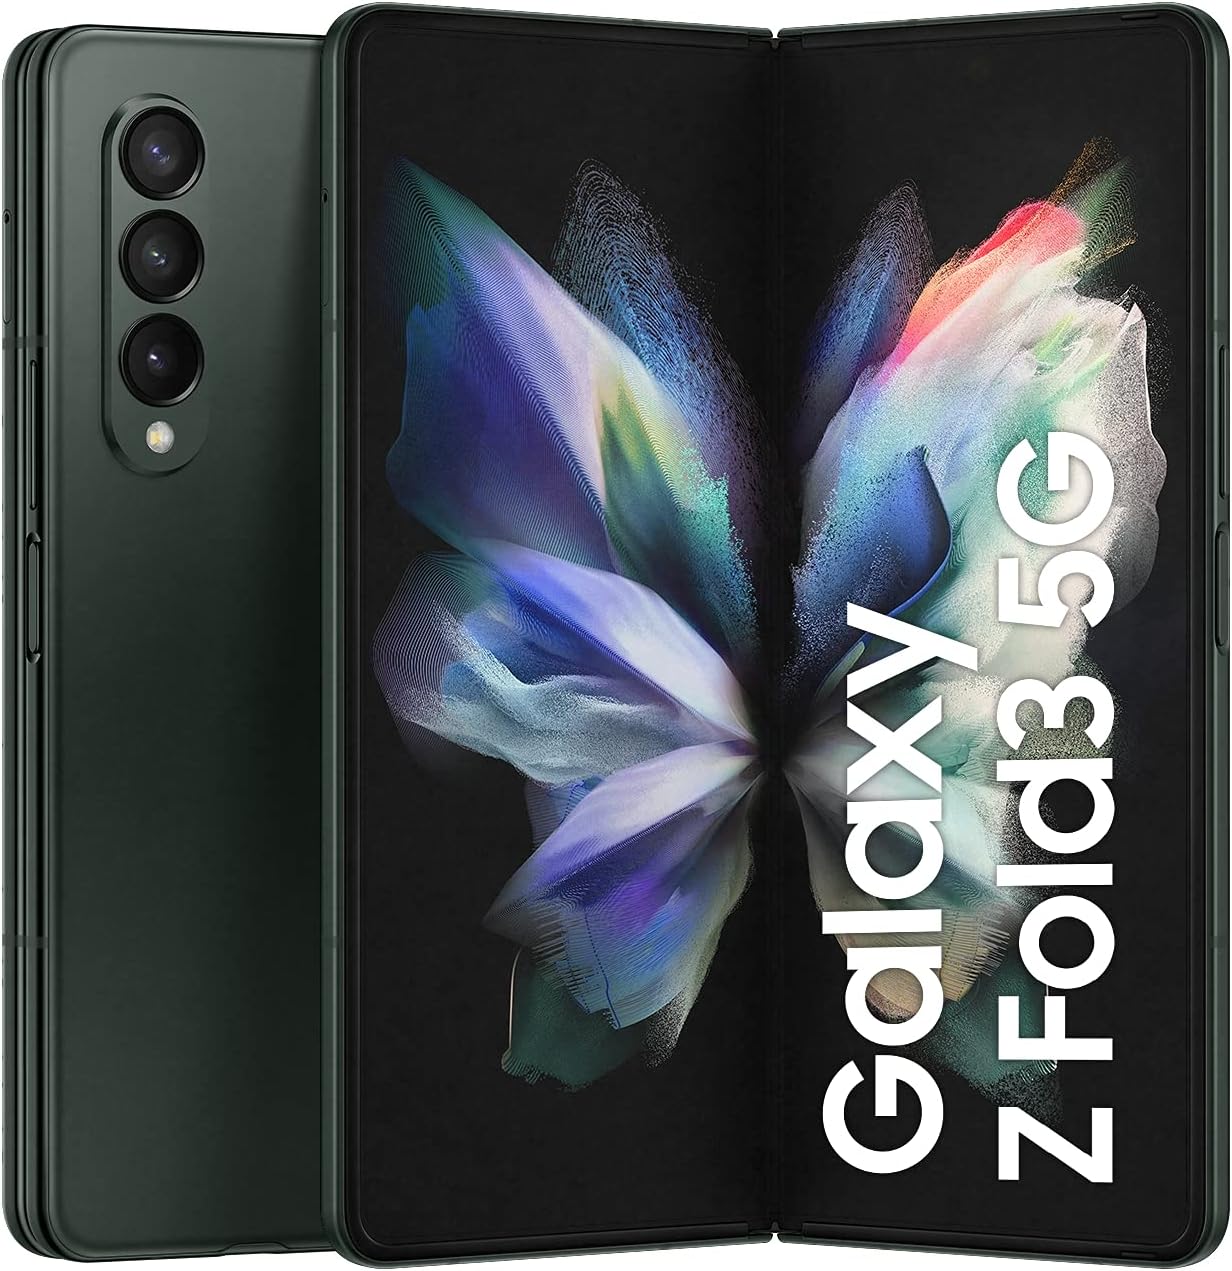 SAMSUNG Galaxy Z Fold3 5G in Phantom Green, 512GB Storage, 12GB RAM - Shape of tomorrow's design, now more portable and durable. 8806092562585